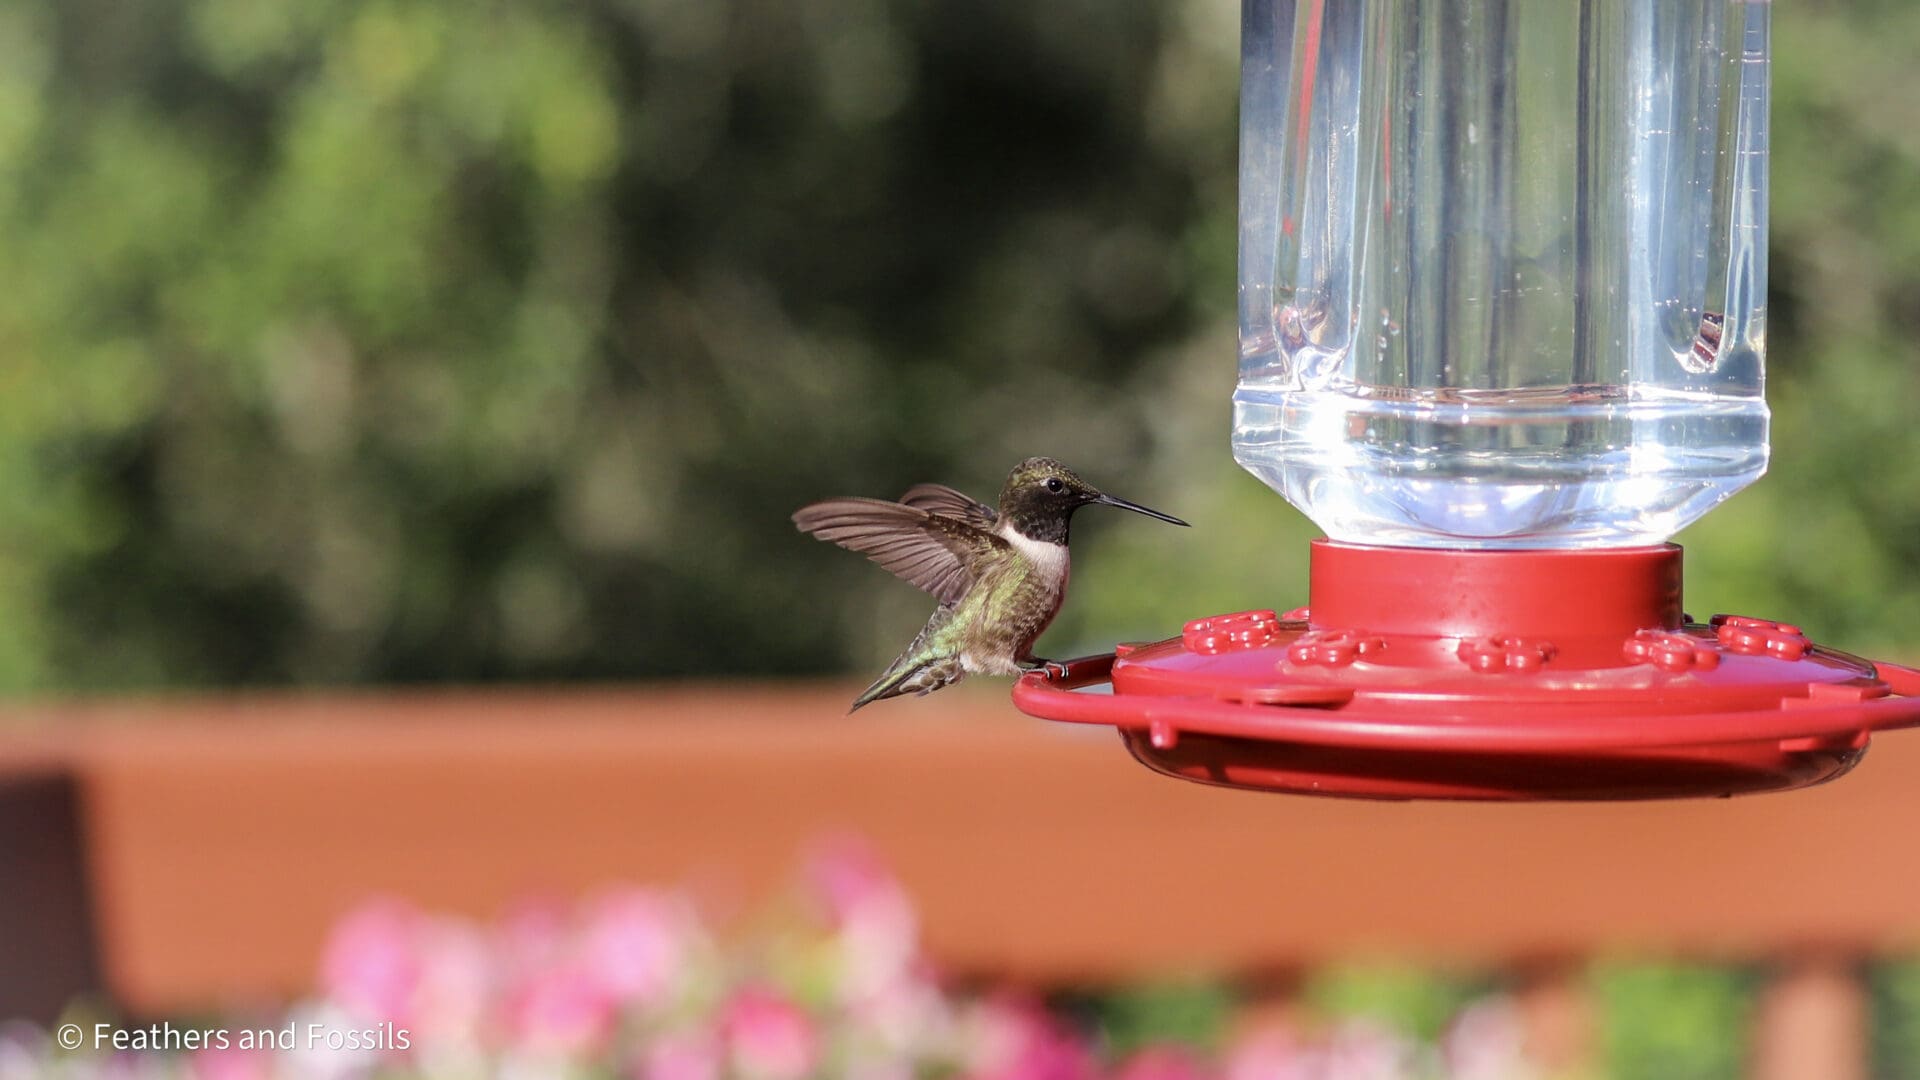 A hummingbird flying near a red bird feeder.